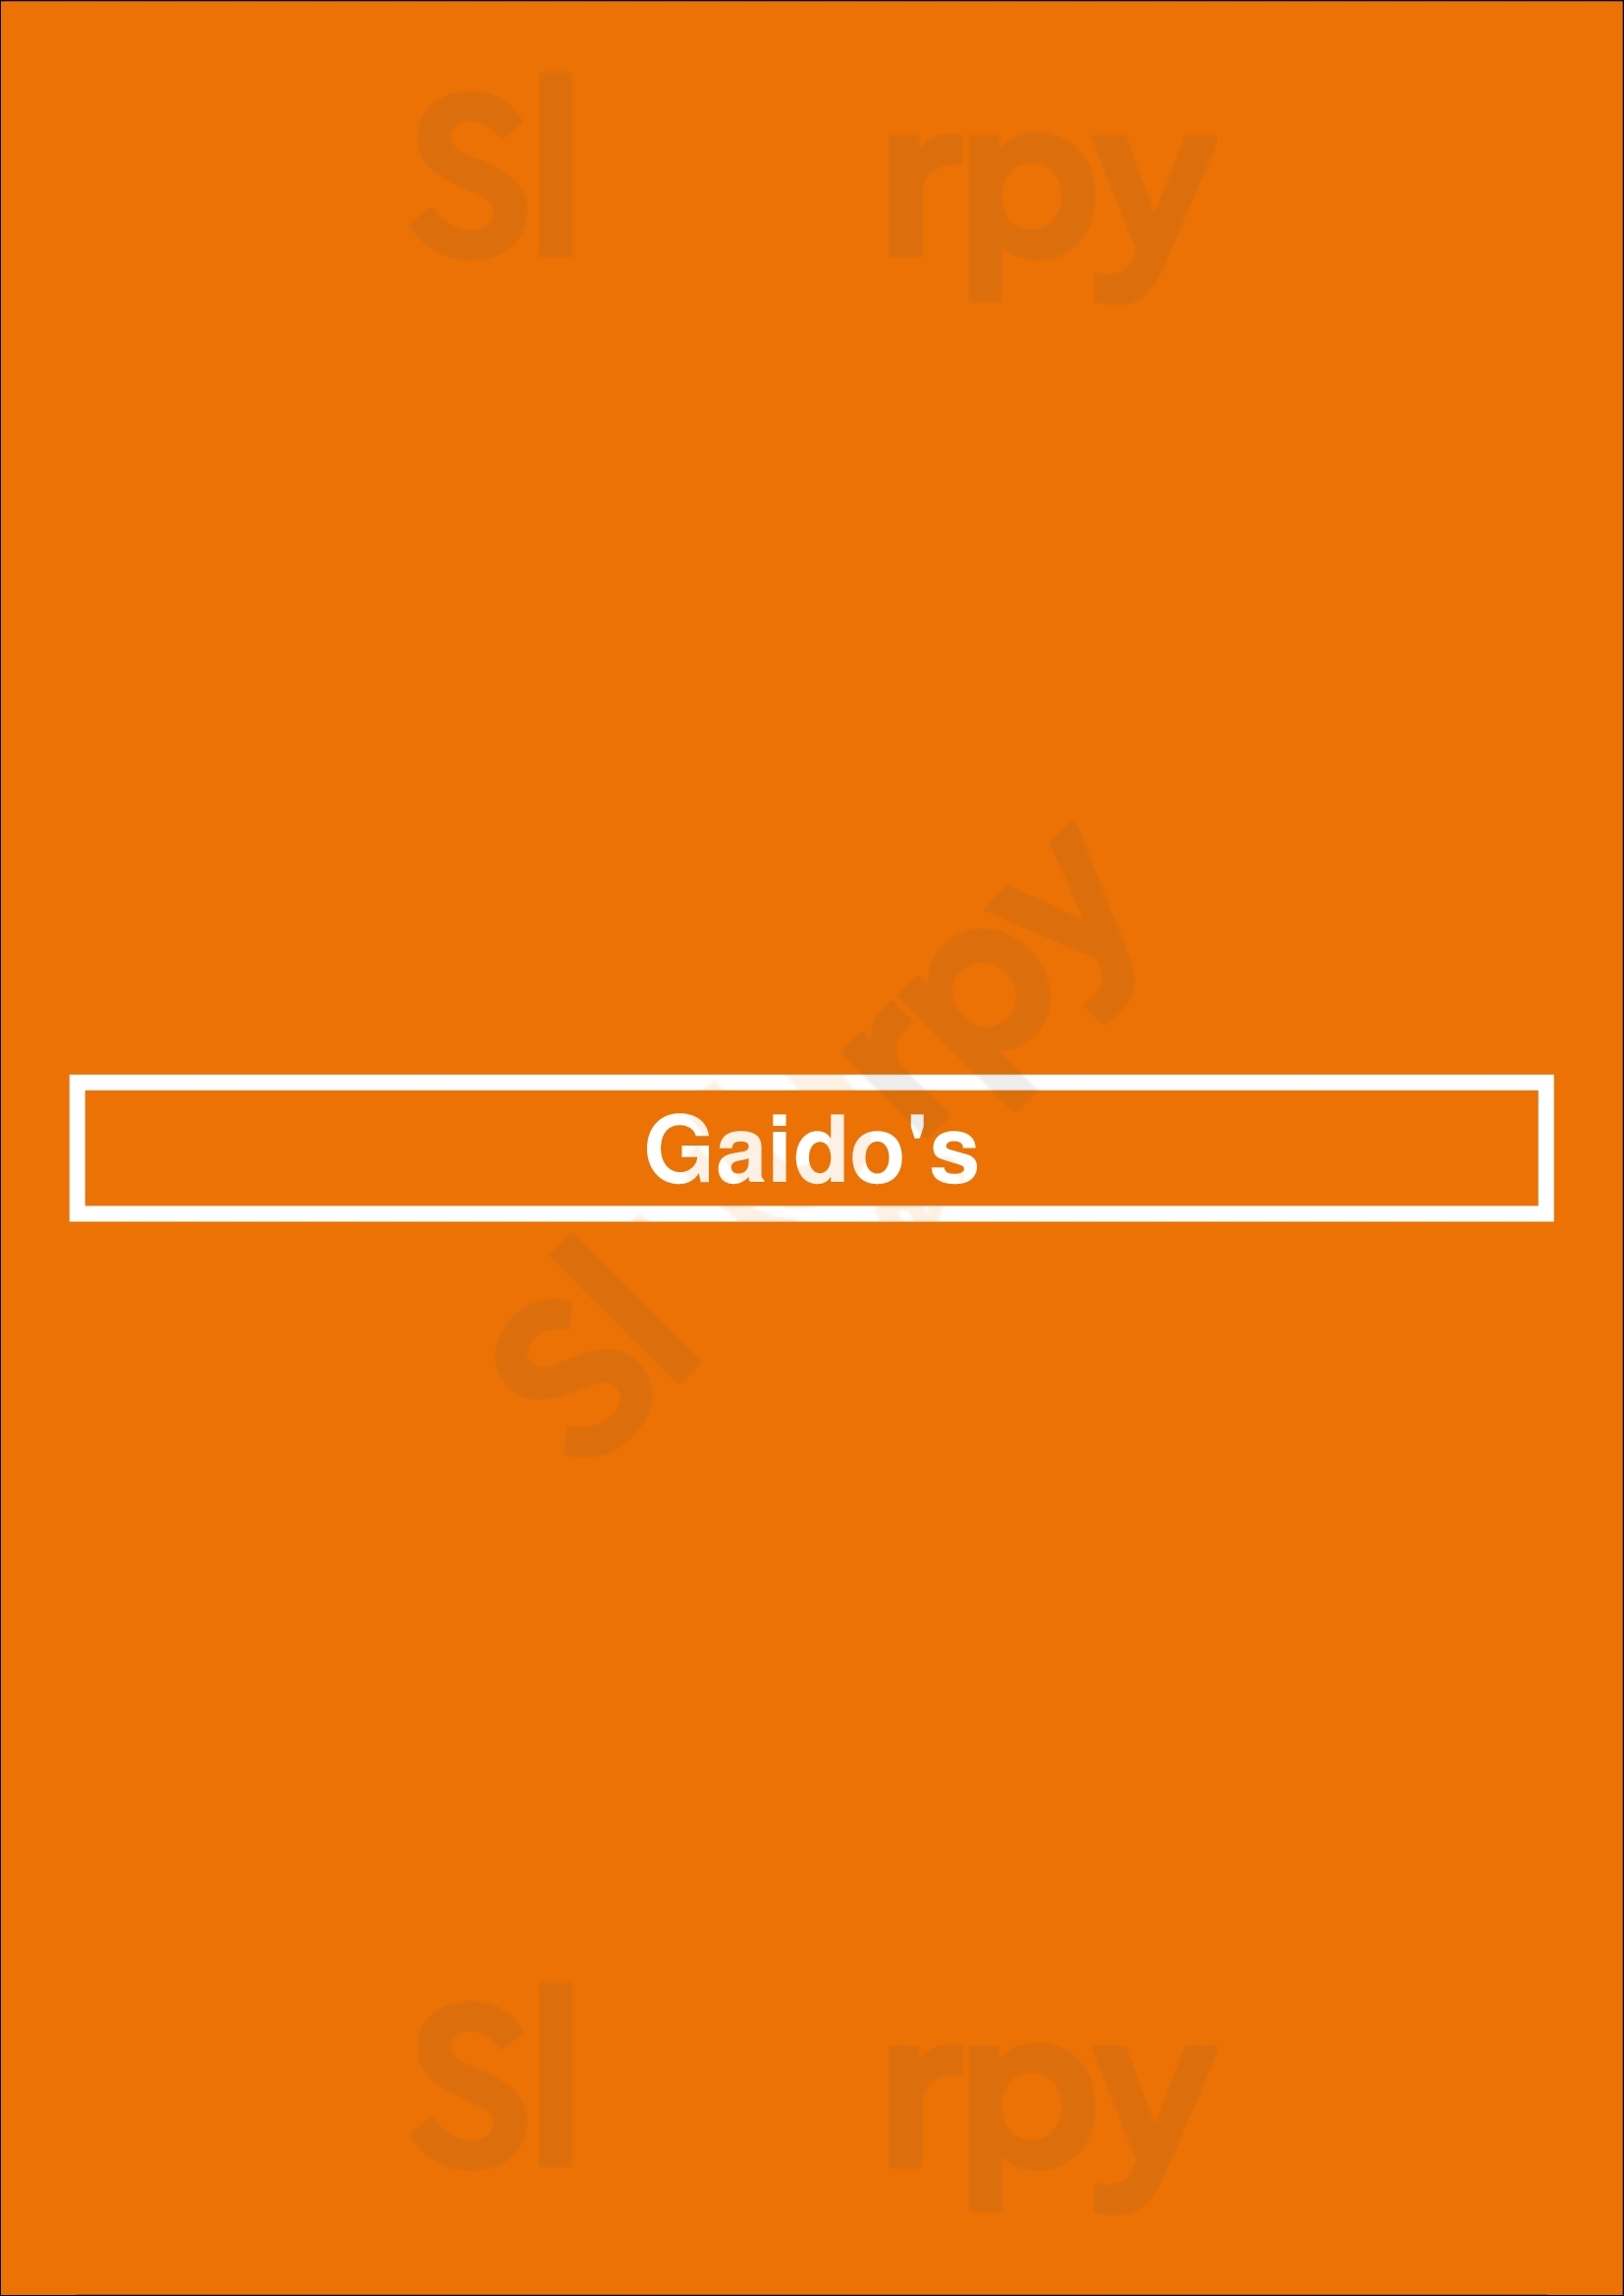 Gaido's Galveston Menu - 1